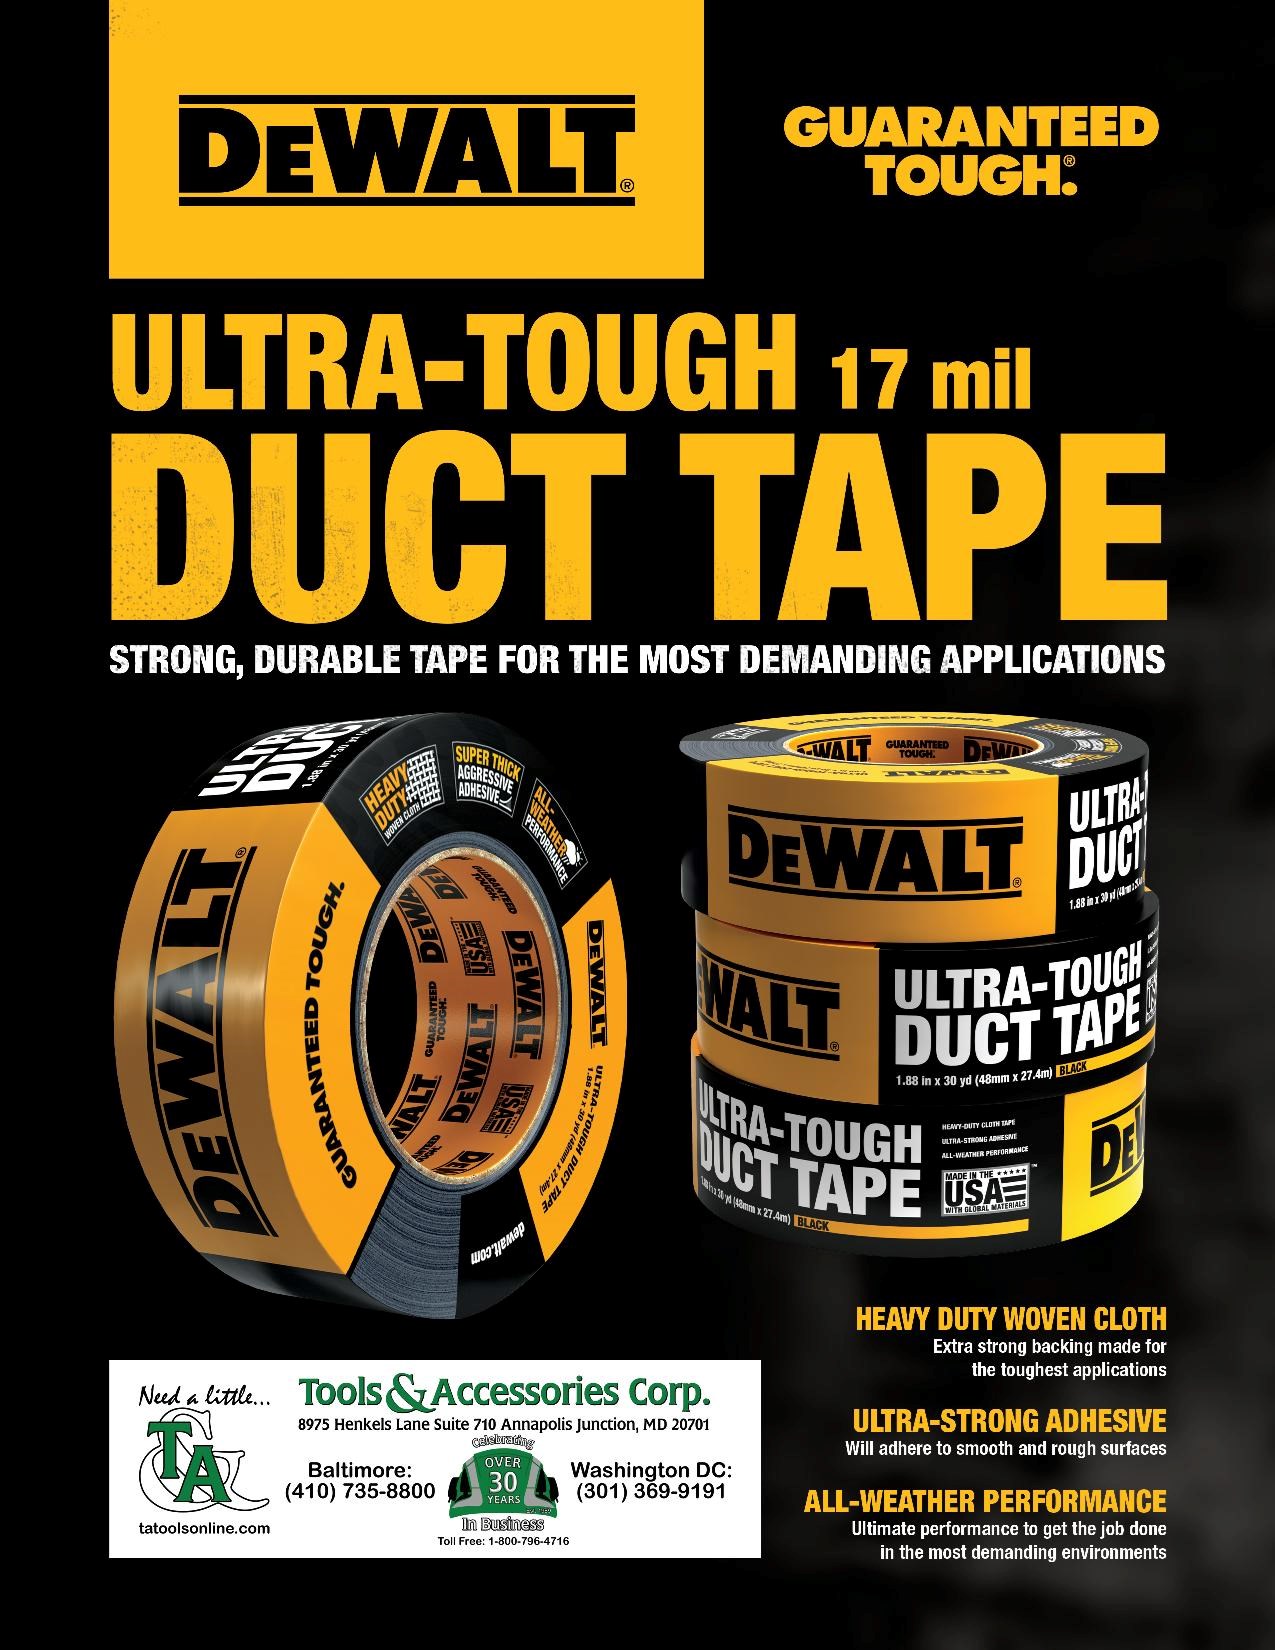 DeWalt Ultra-Tough Duct Tape